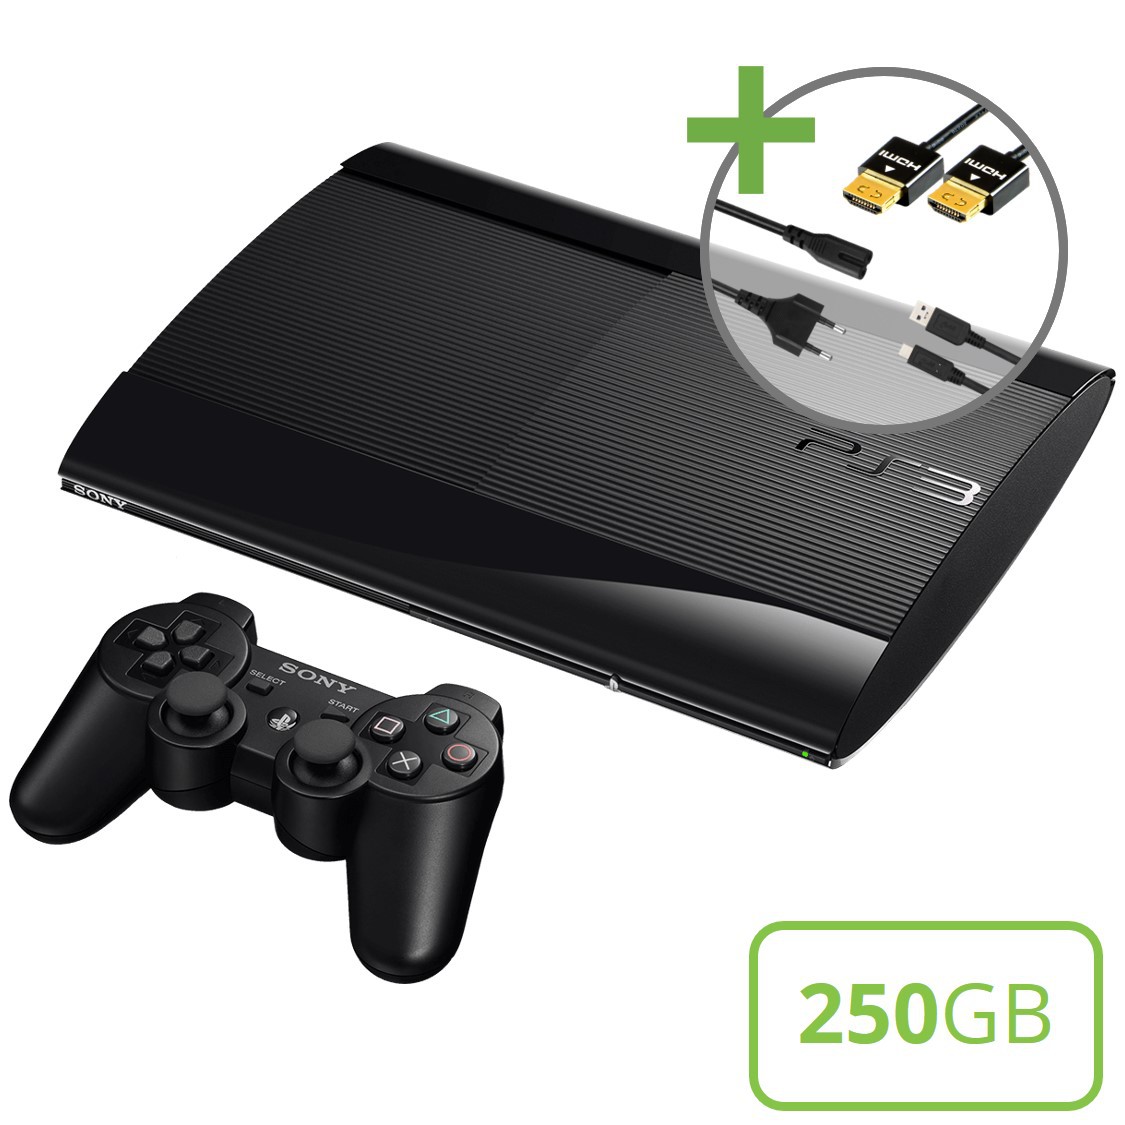 Sony PlayStation 3 Super Slim (250GB) Starter Pack - DualShock Edition - Playstation 3 Hardware